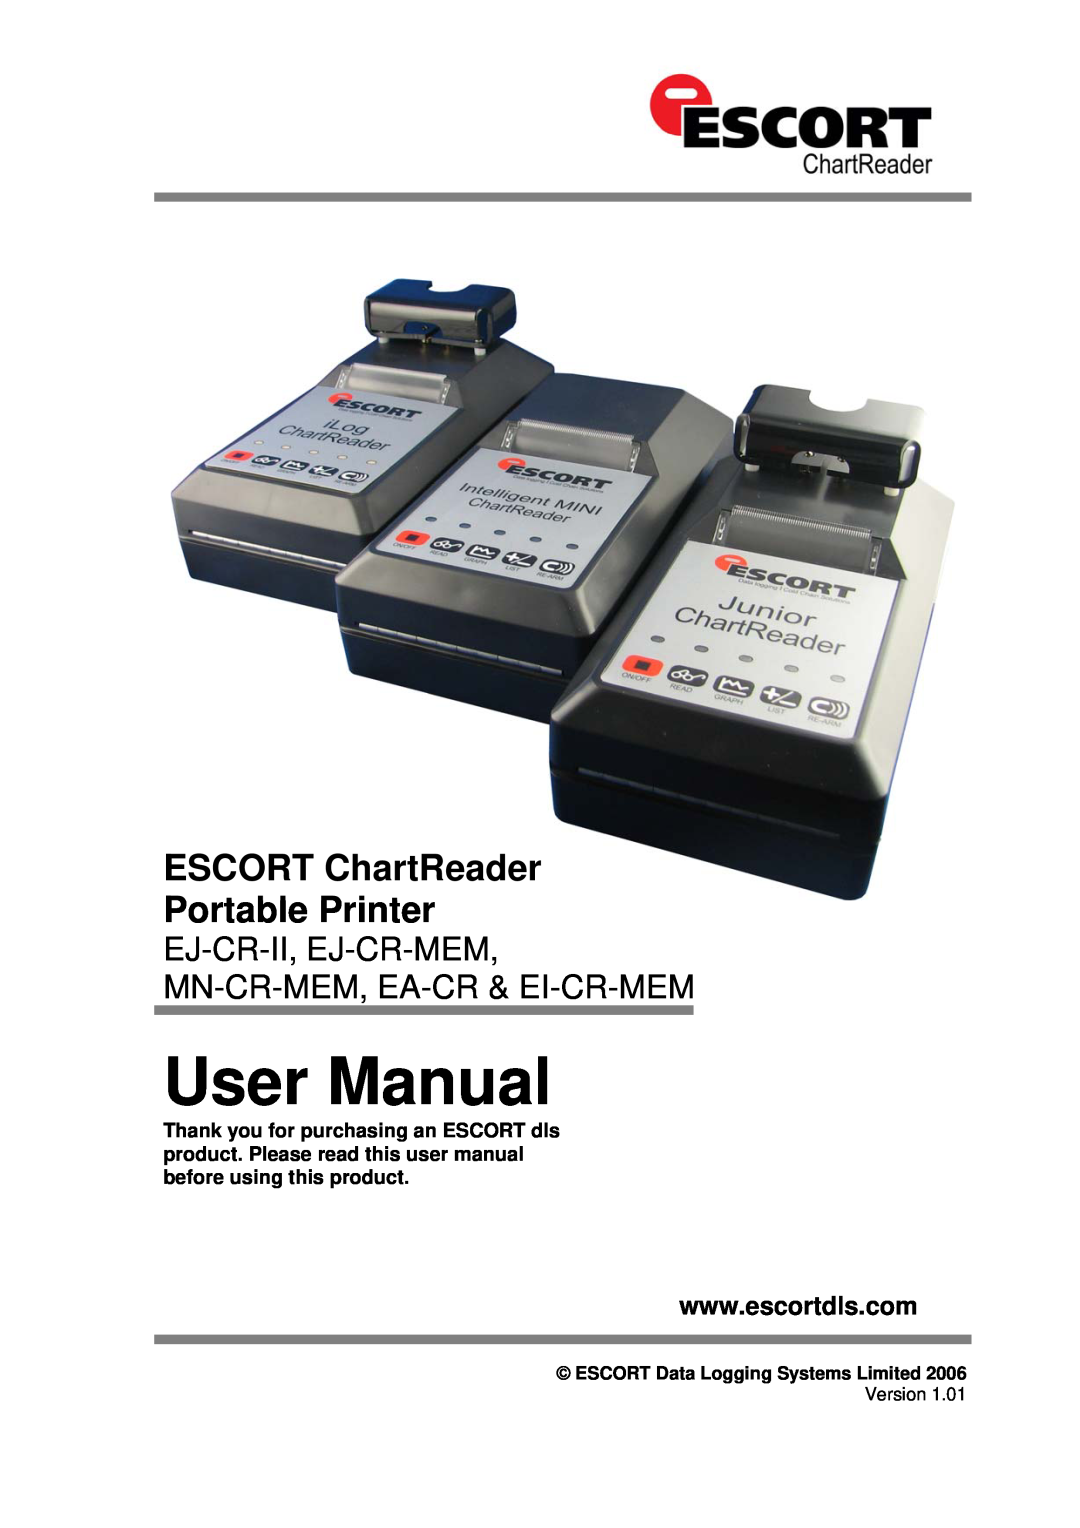 Escort EJ-CR-II, EA-CR user manual ESCORT Data Logging Systems Limited, User Manual, ESCORT ChartReader Portable Printer 